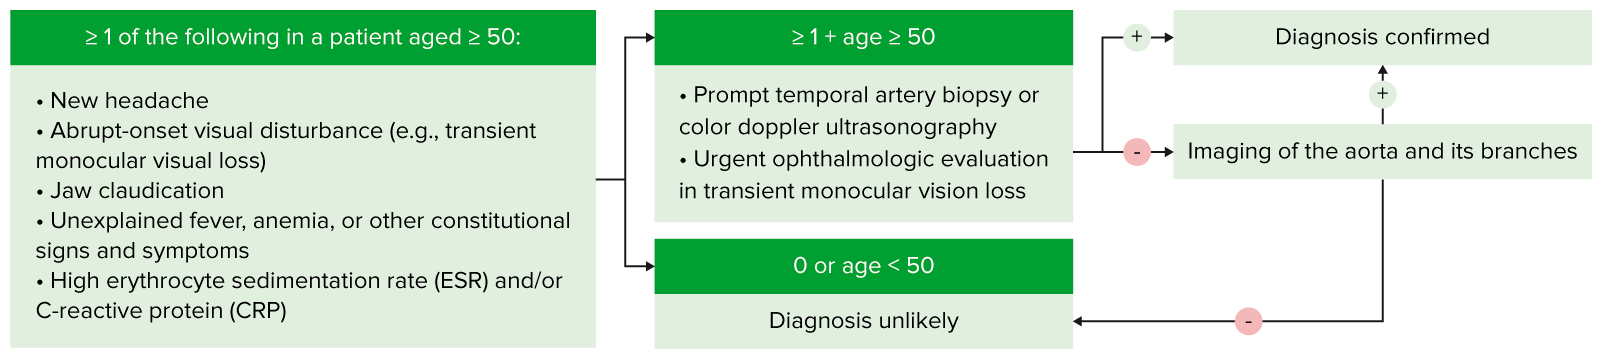 Algoritmo de diagnóstico da arterite temporal